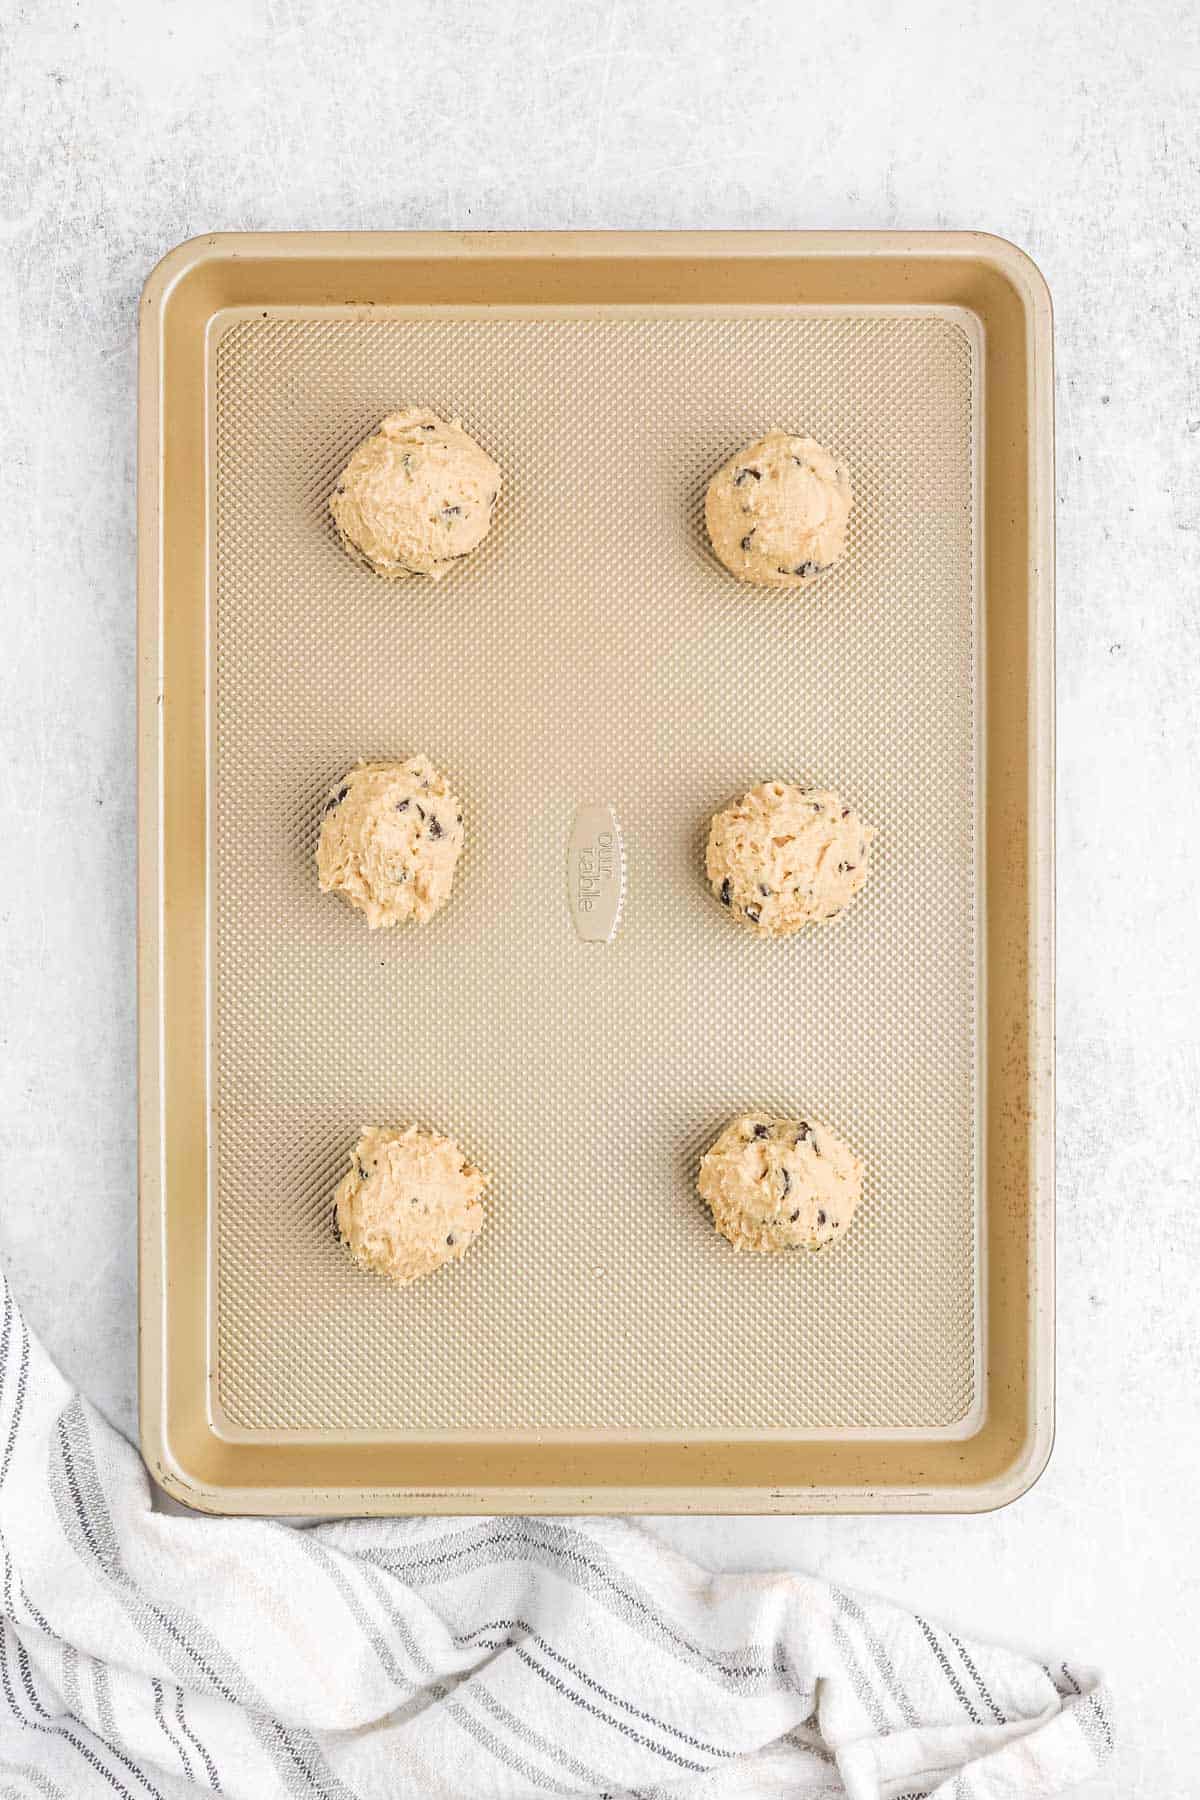 Mrs Fields cookie dough shaped into balls on a baking sheet.